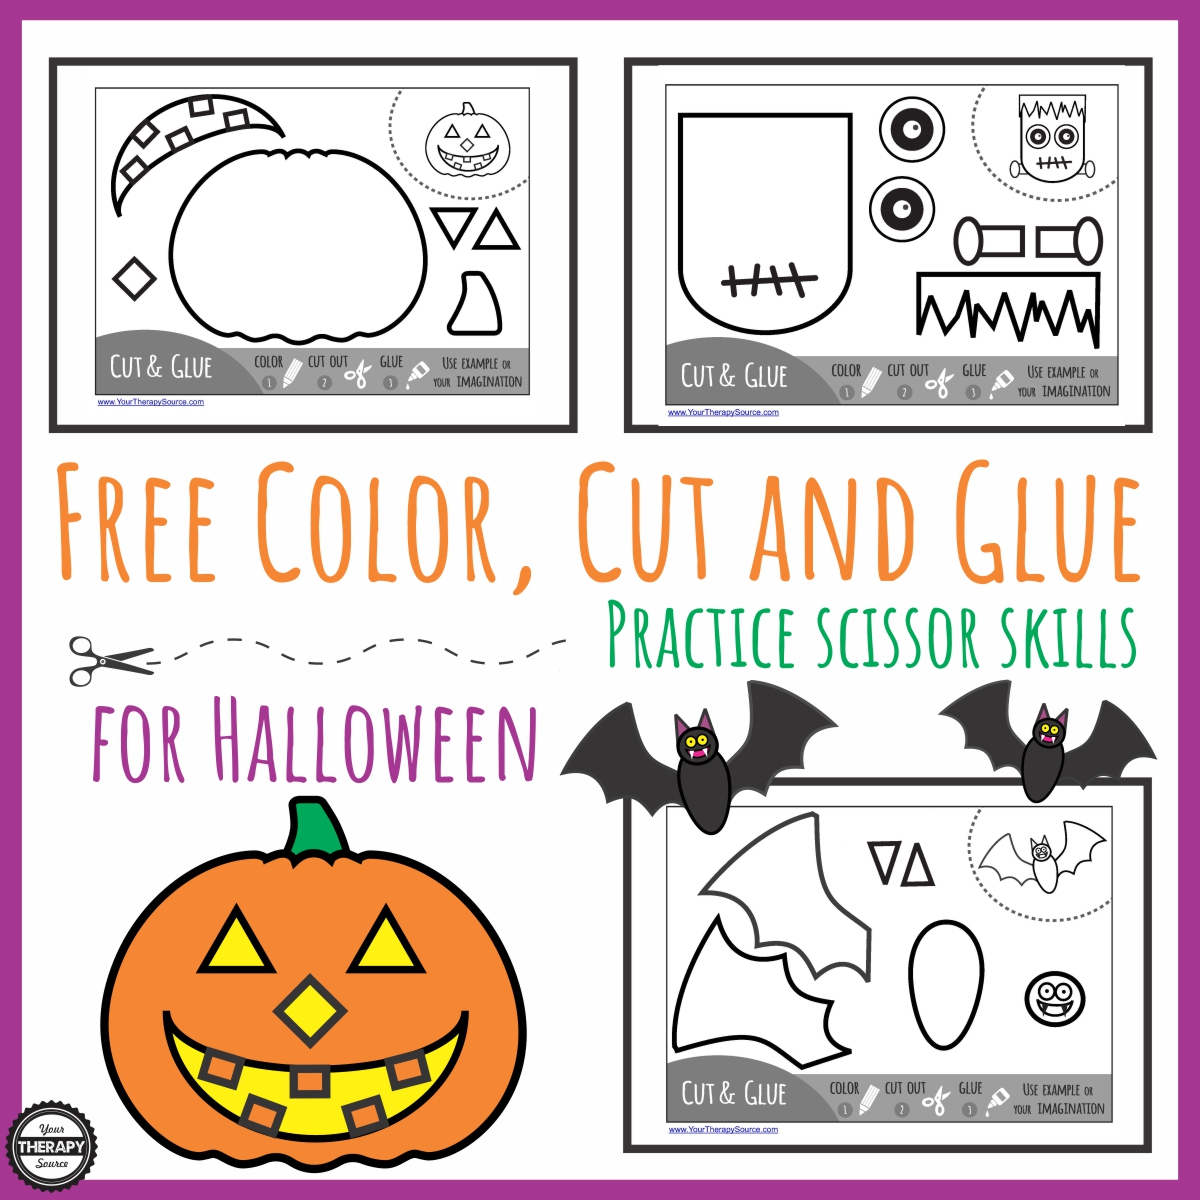 Color Cut Glue Halloween - Practice Scissor Skills - Your